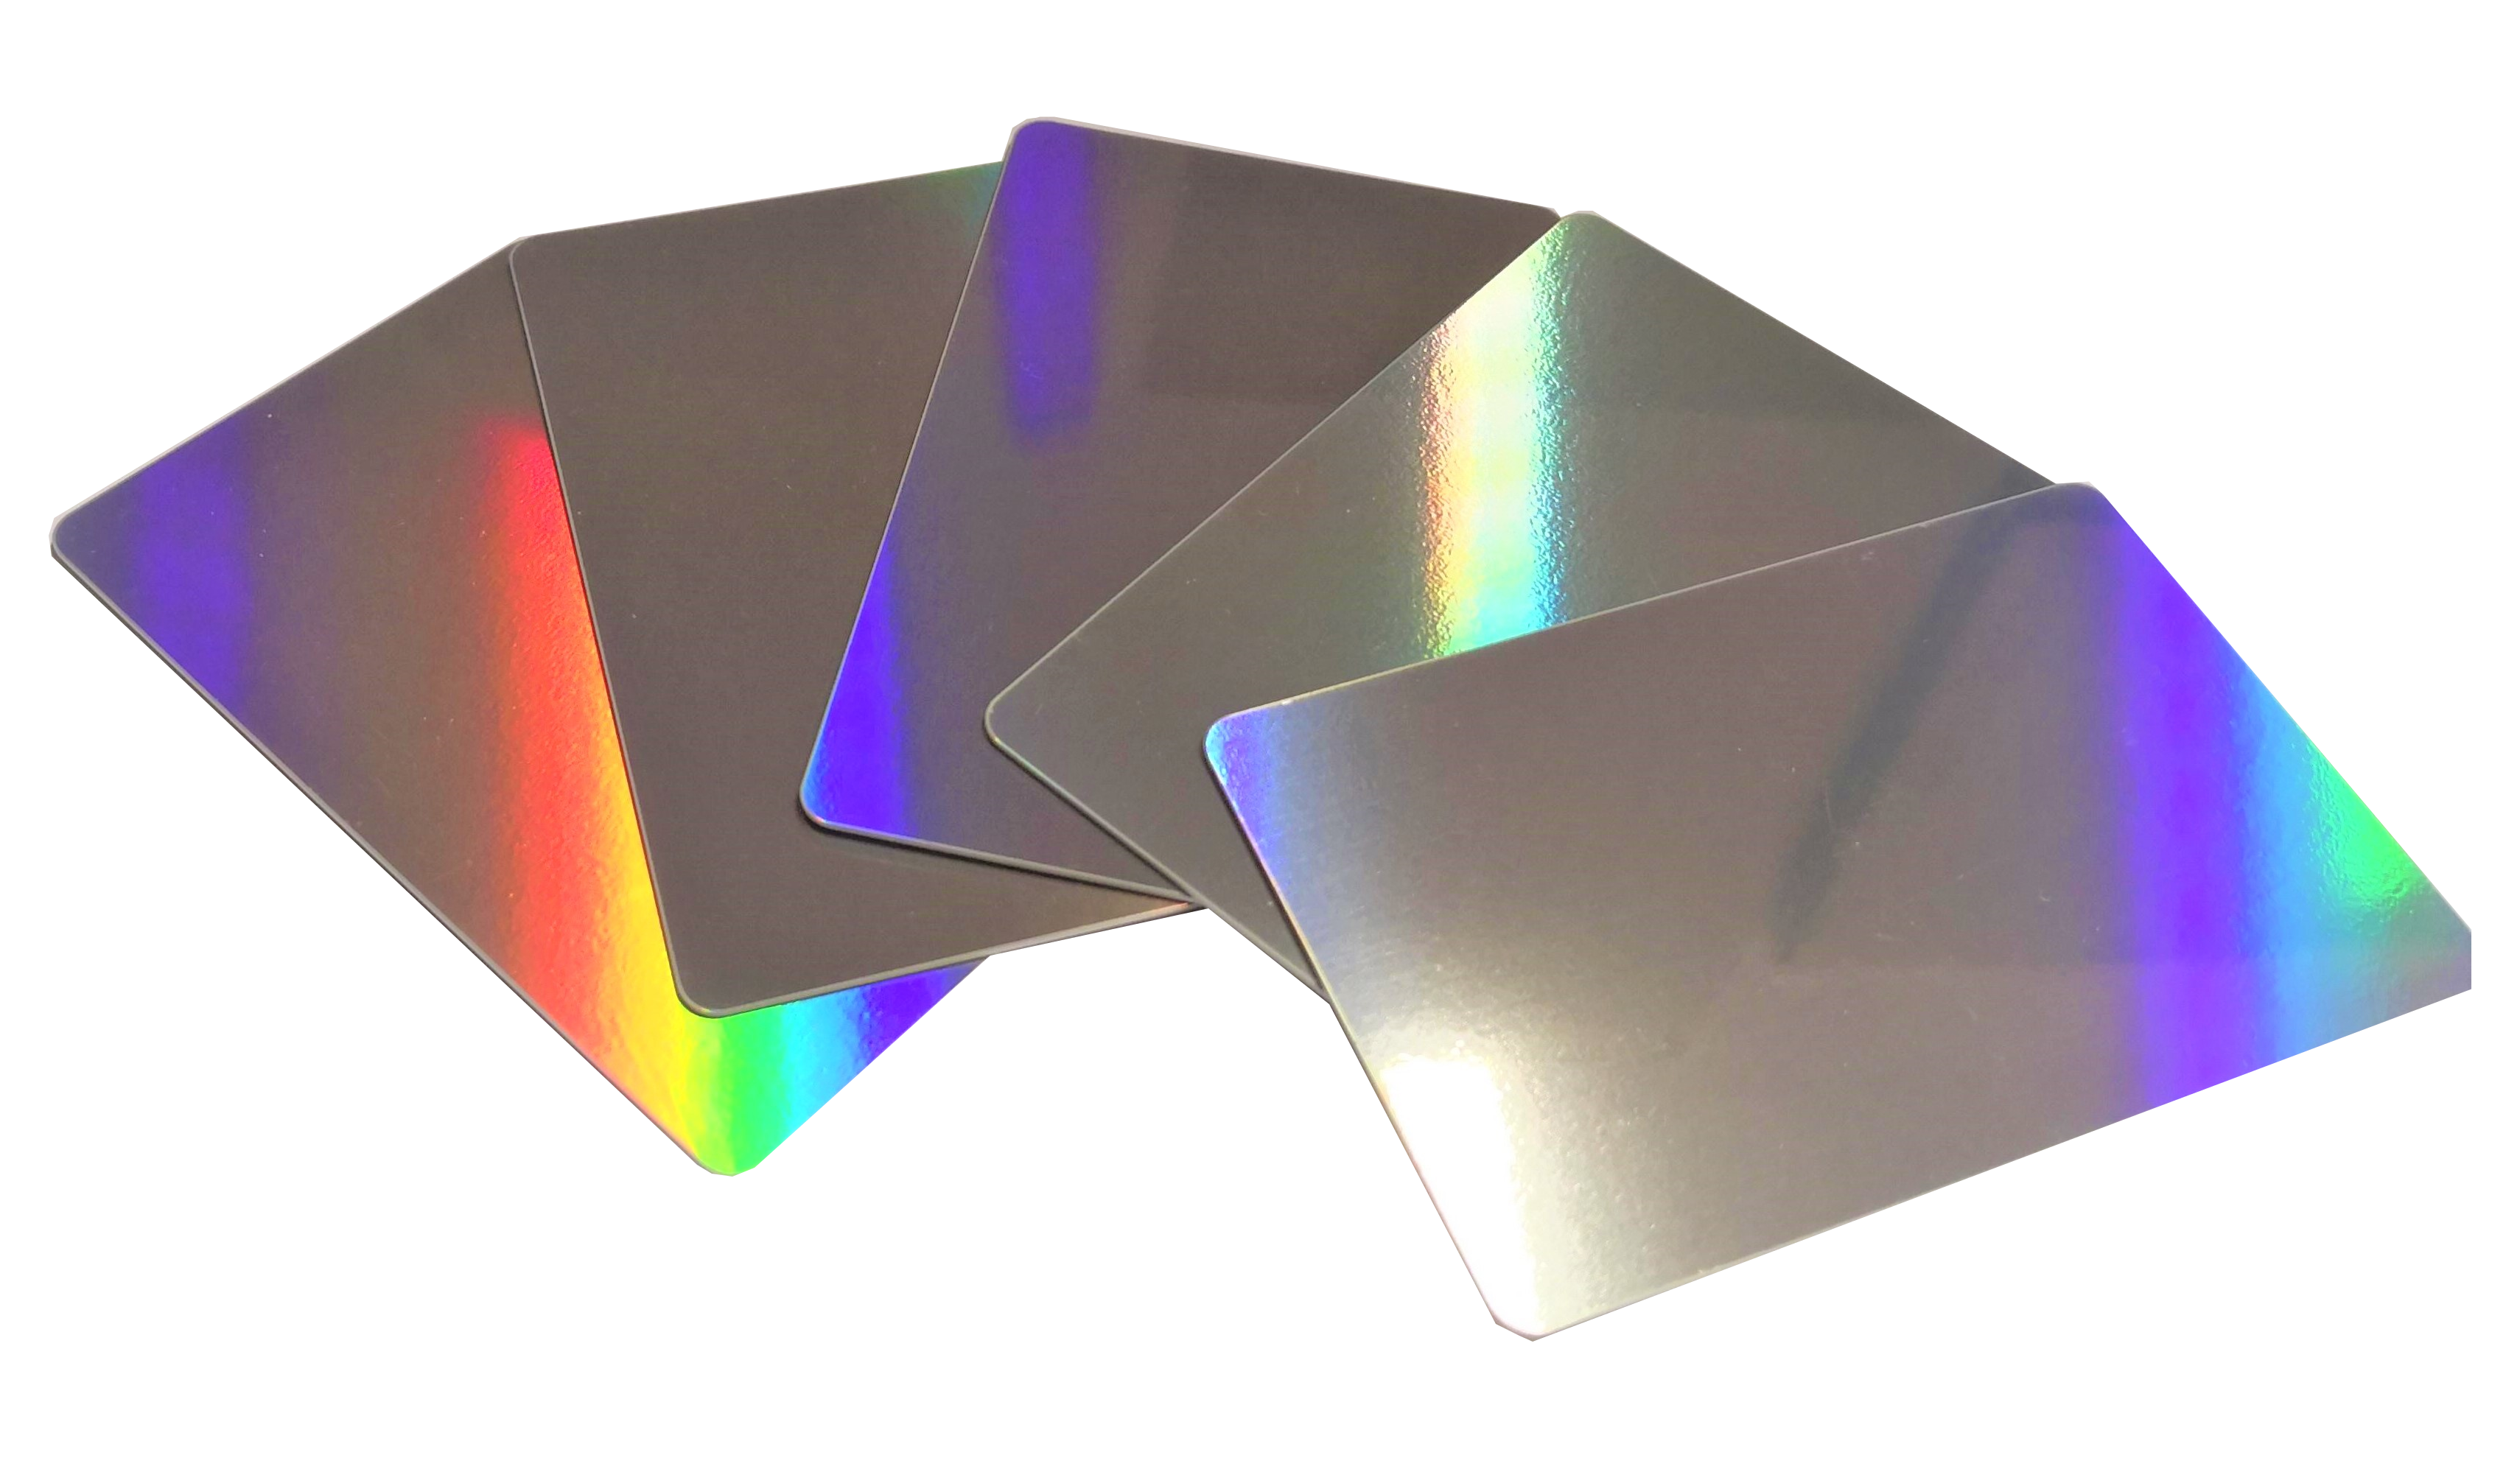 Card blanko 250 Plastikkarten / PVC Karten gold-metallic Kartendrucker Neu 